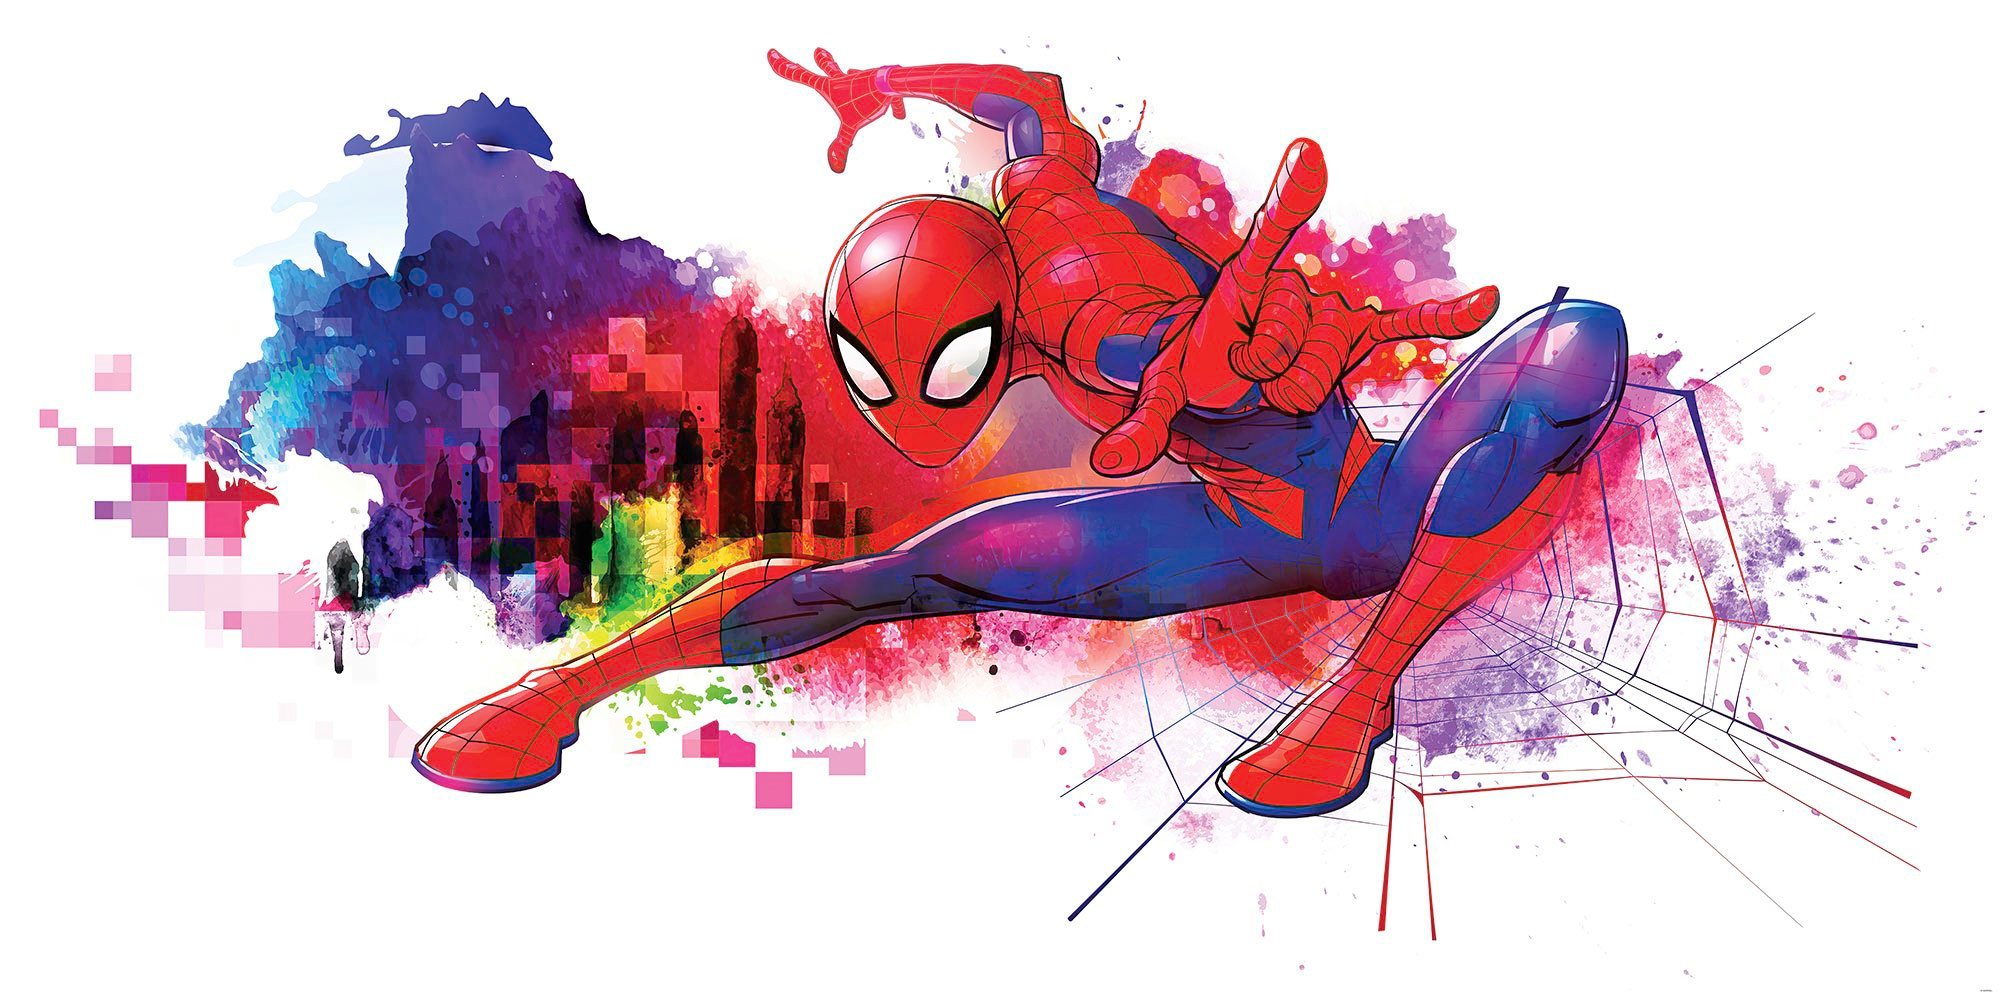 Vliestapete »Spider-Man Graffiti Art«, 300x150 cm (Breite x Höhe)